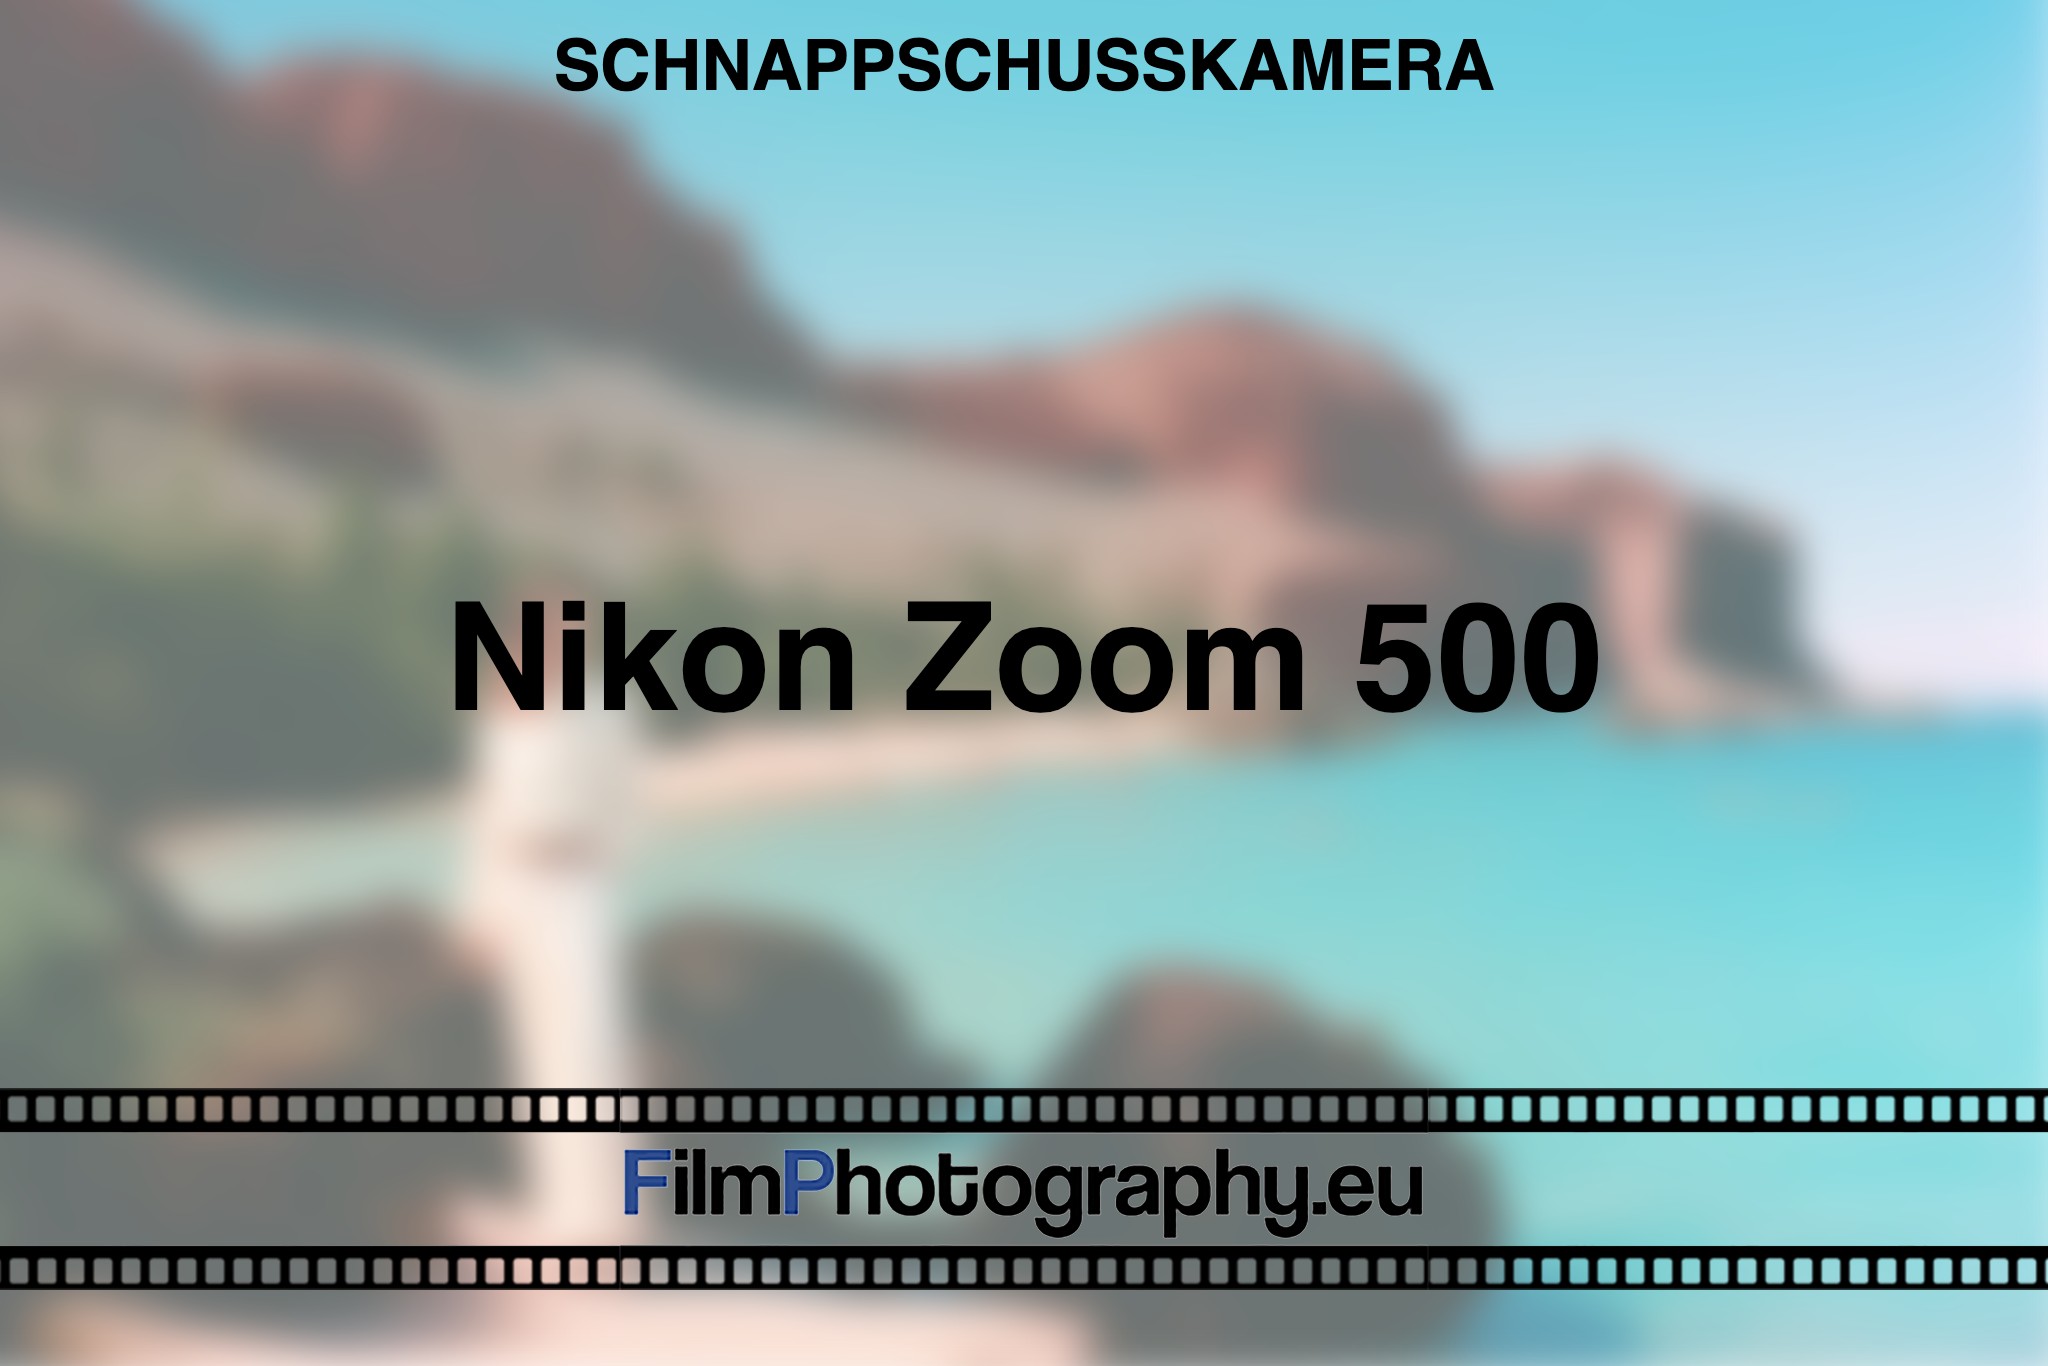 nikon-zoom-500-schnappschusskamera-bnv